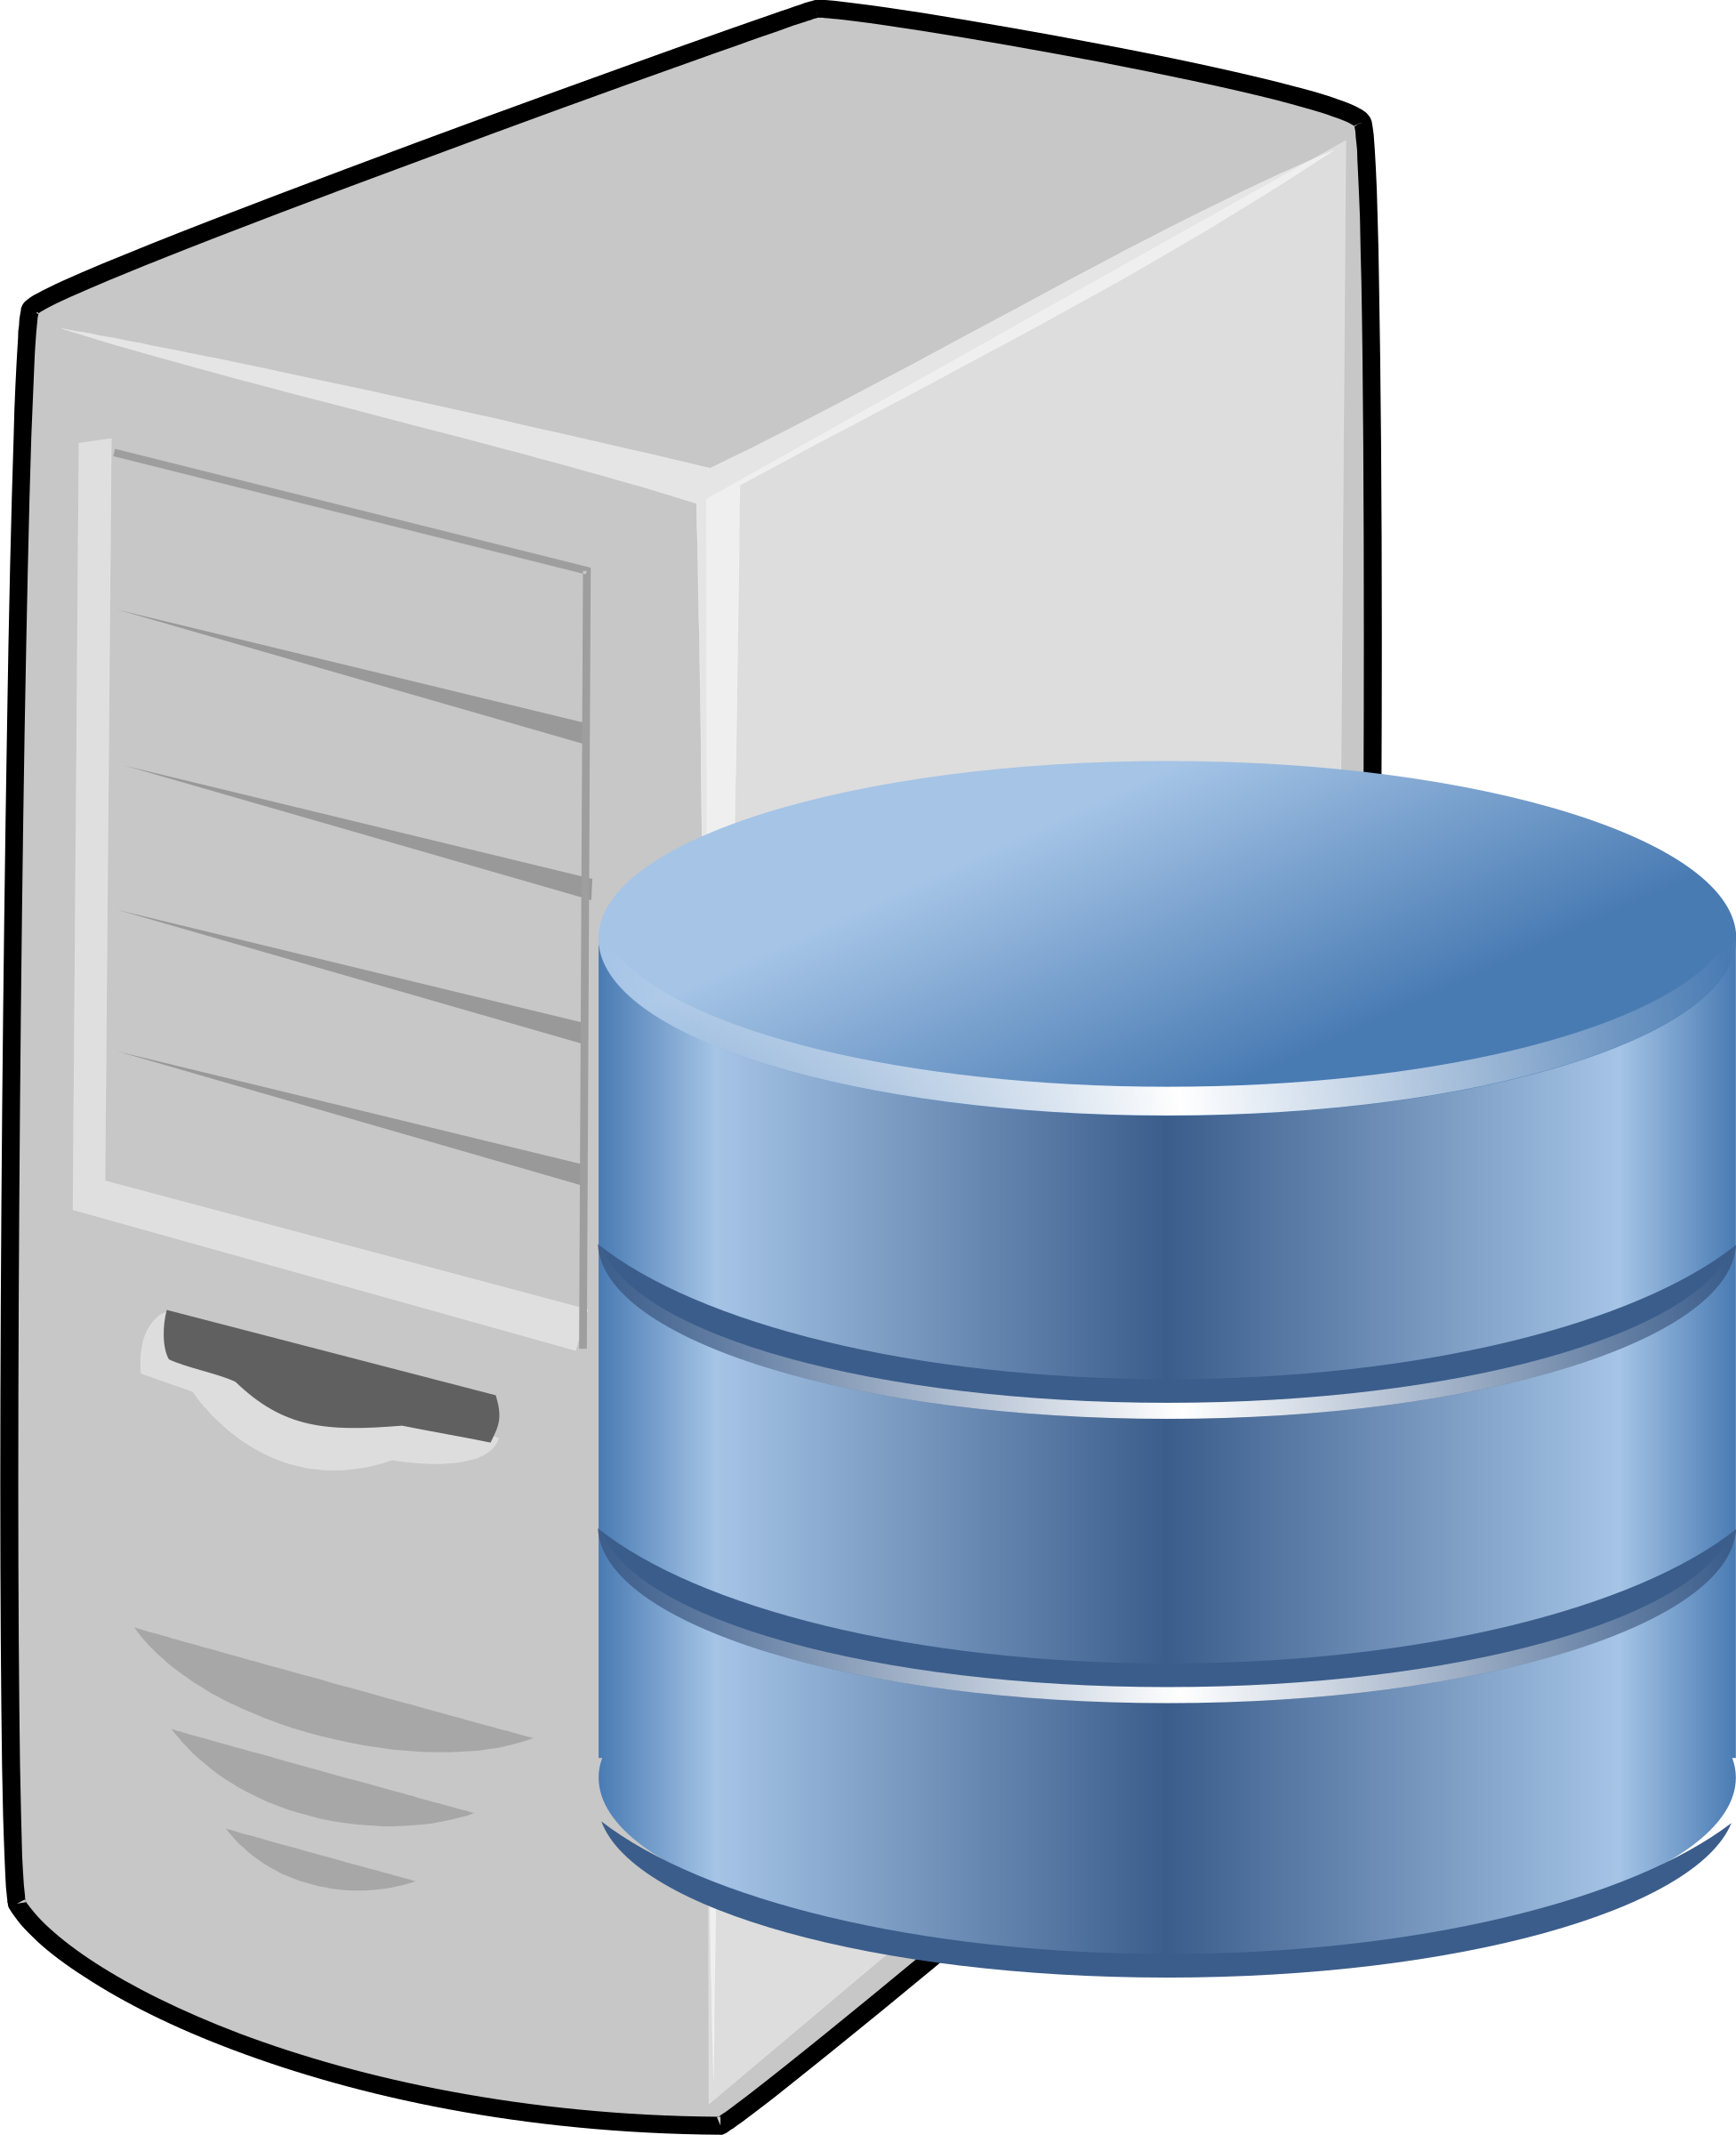 Data center, database, host, hosting, storage, web hosting, web 